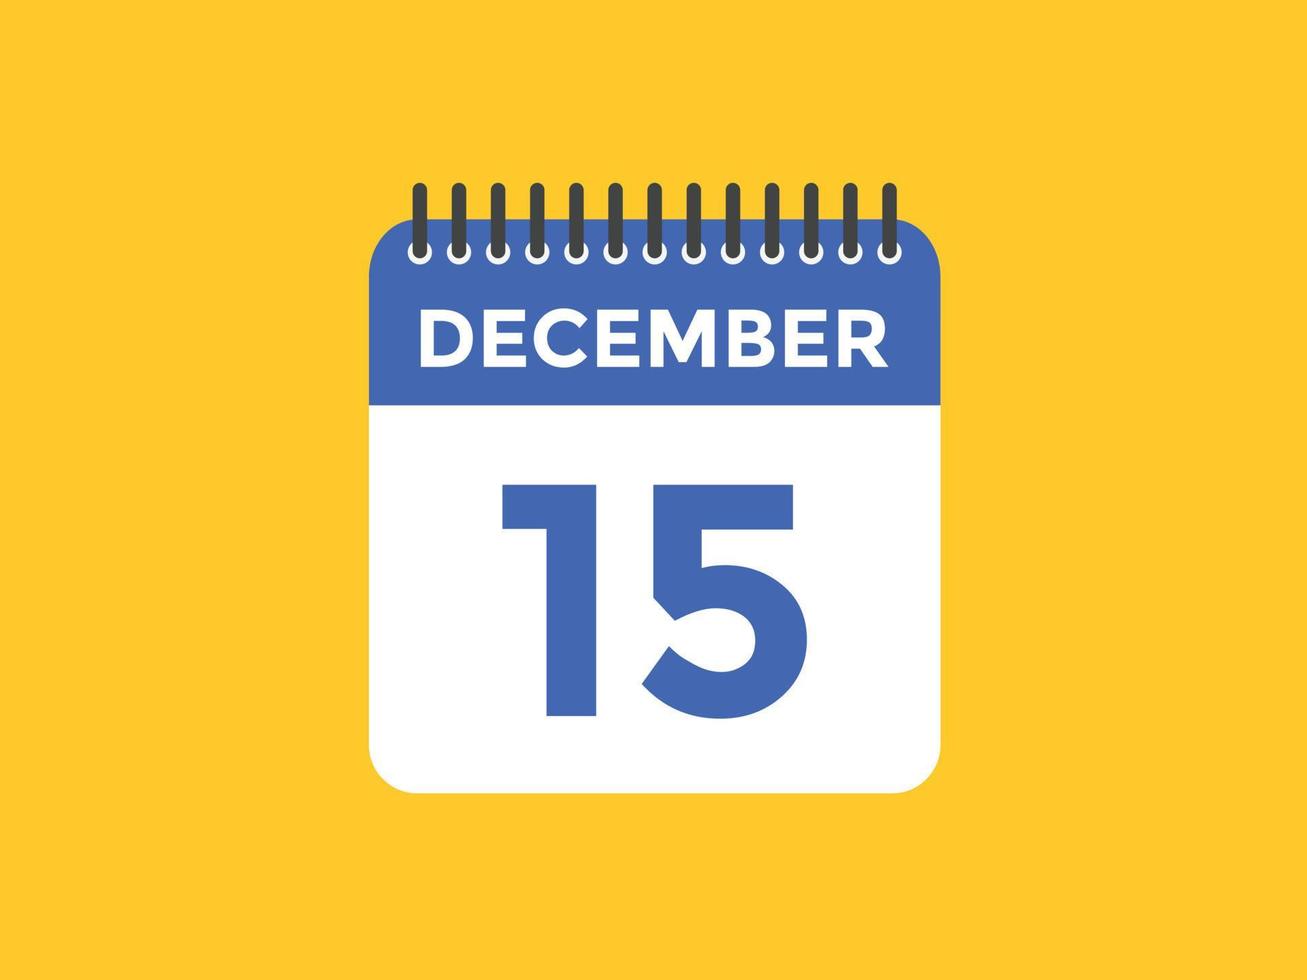 december 15 calendar reminder. 15th december daily calendar icon template. Calendar 15th december icon Design template. Vector illustration